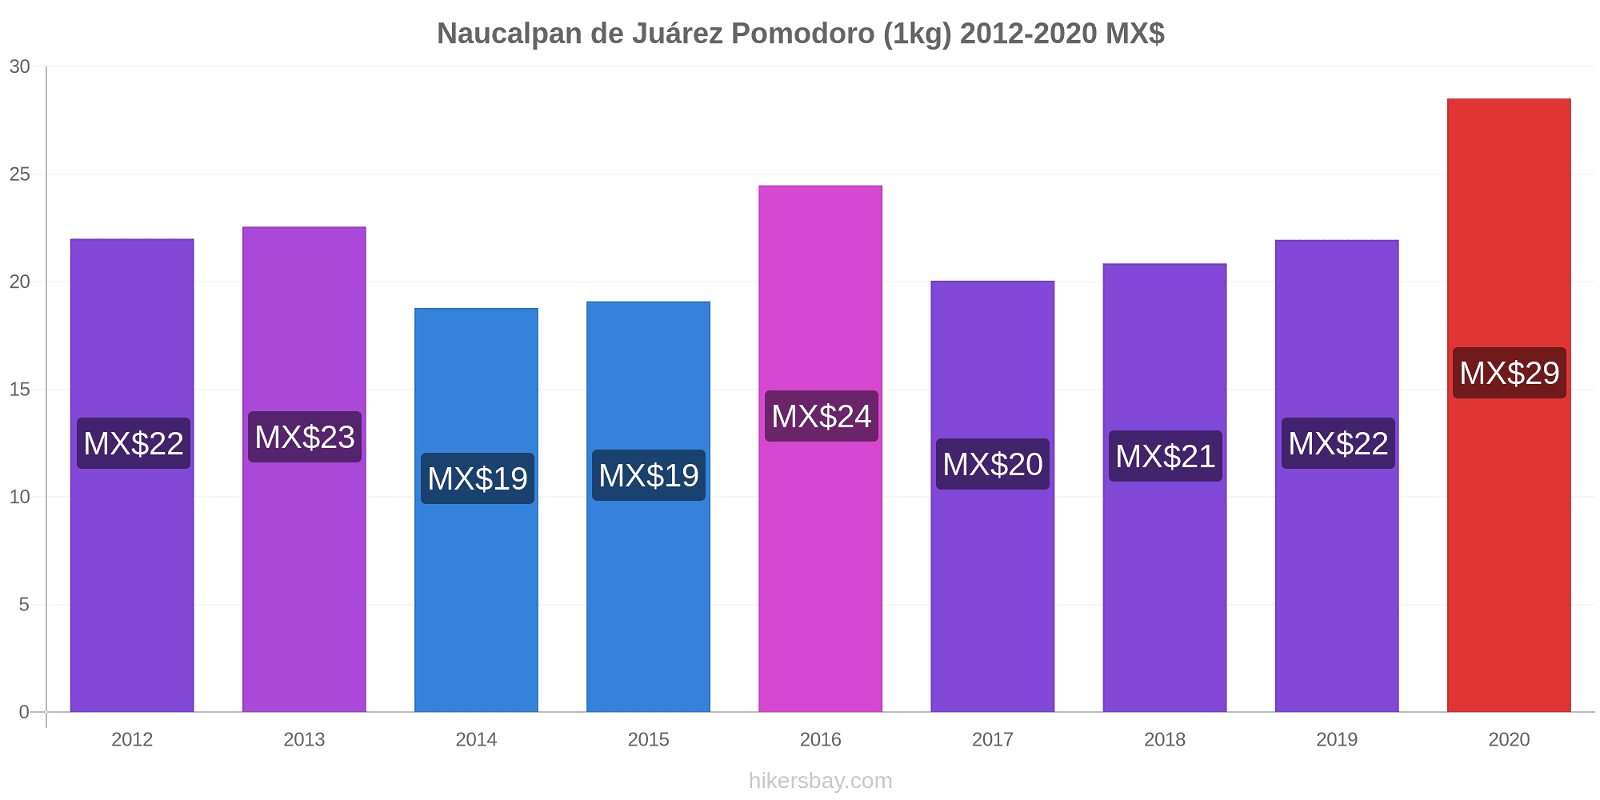 Naucalpan de Juárez variazioni di prezzo Pomodoro (1kg) hikersbay.com